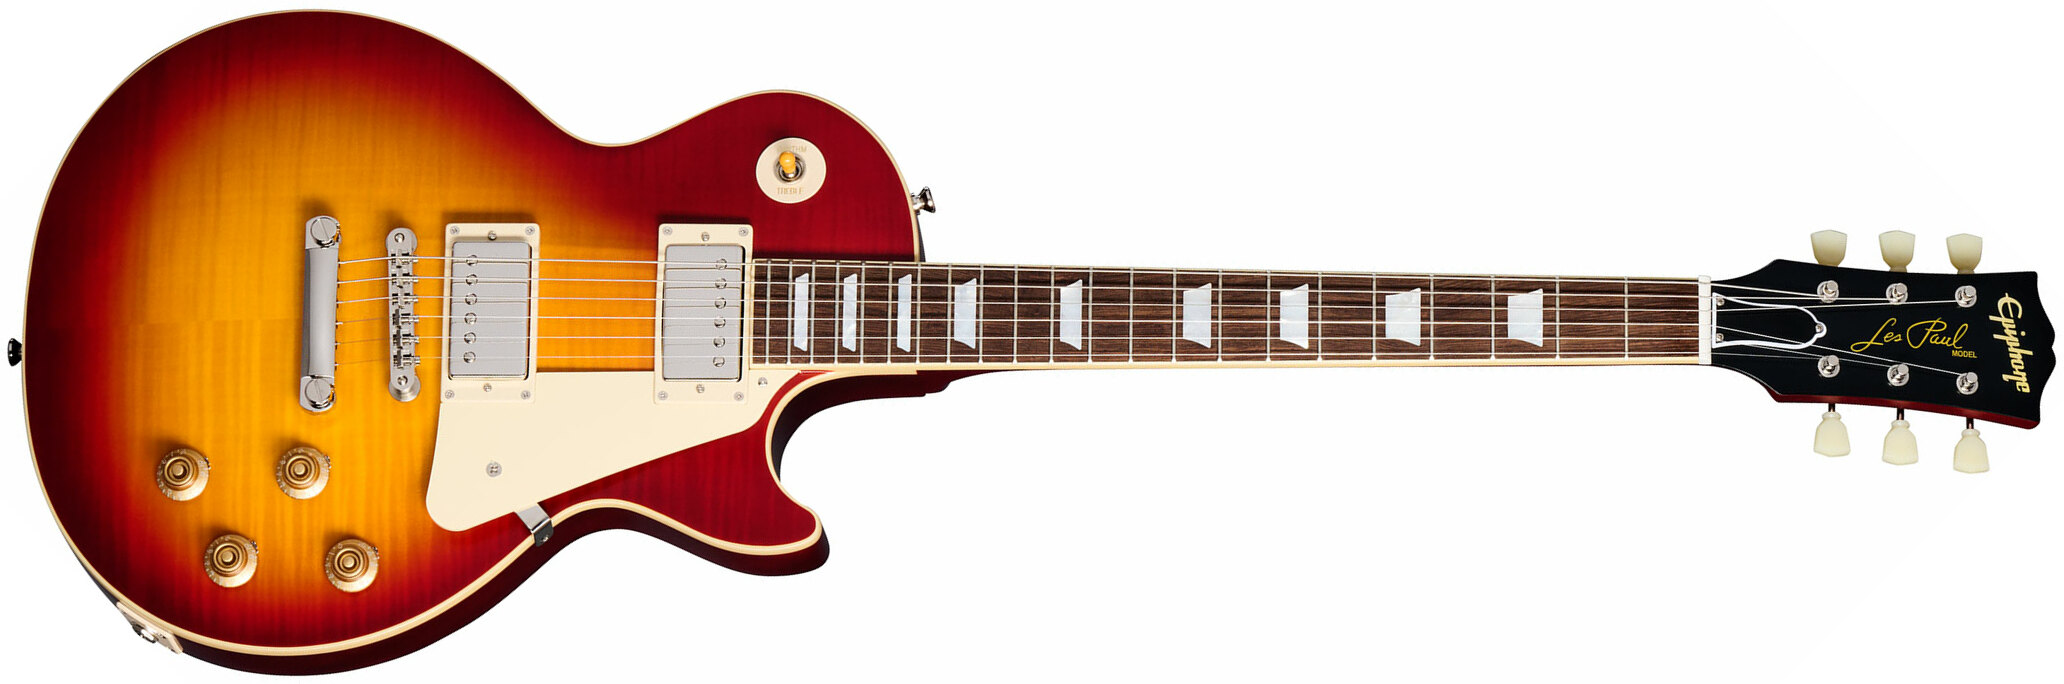 Epiphone 1959 Les Paul Standard Inspired By 2h Gibson Ht Lau - Vos Factory Burst - Enkel gesneden elektrische gitaar - Main picture